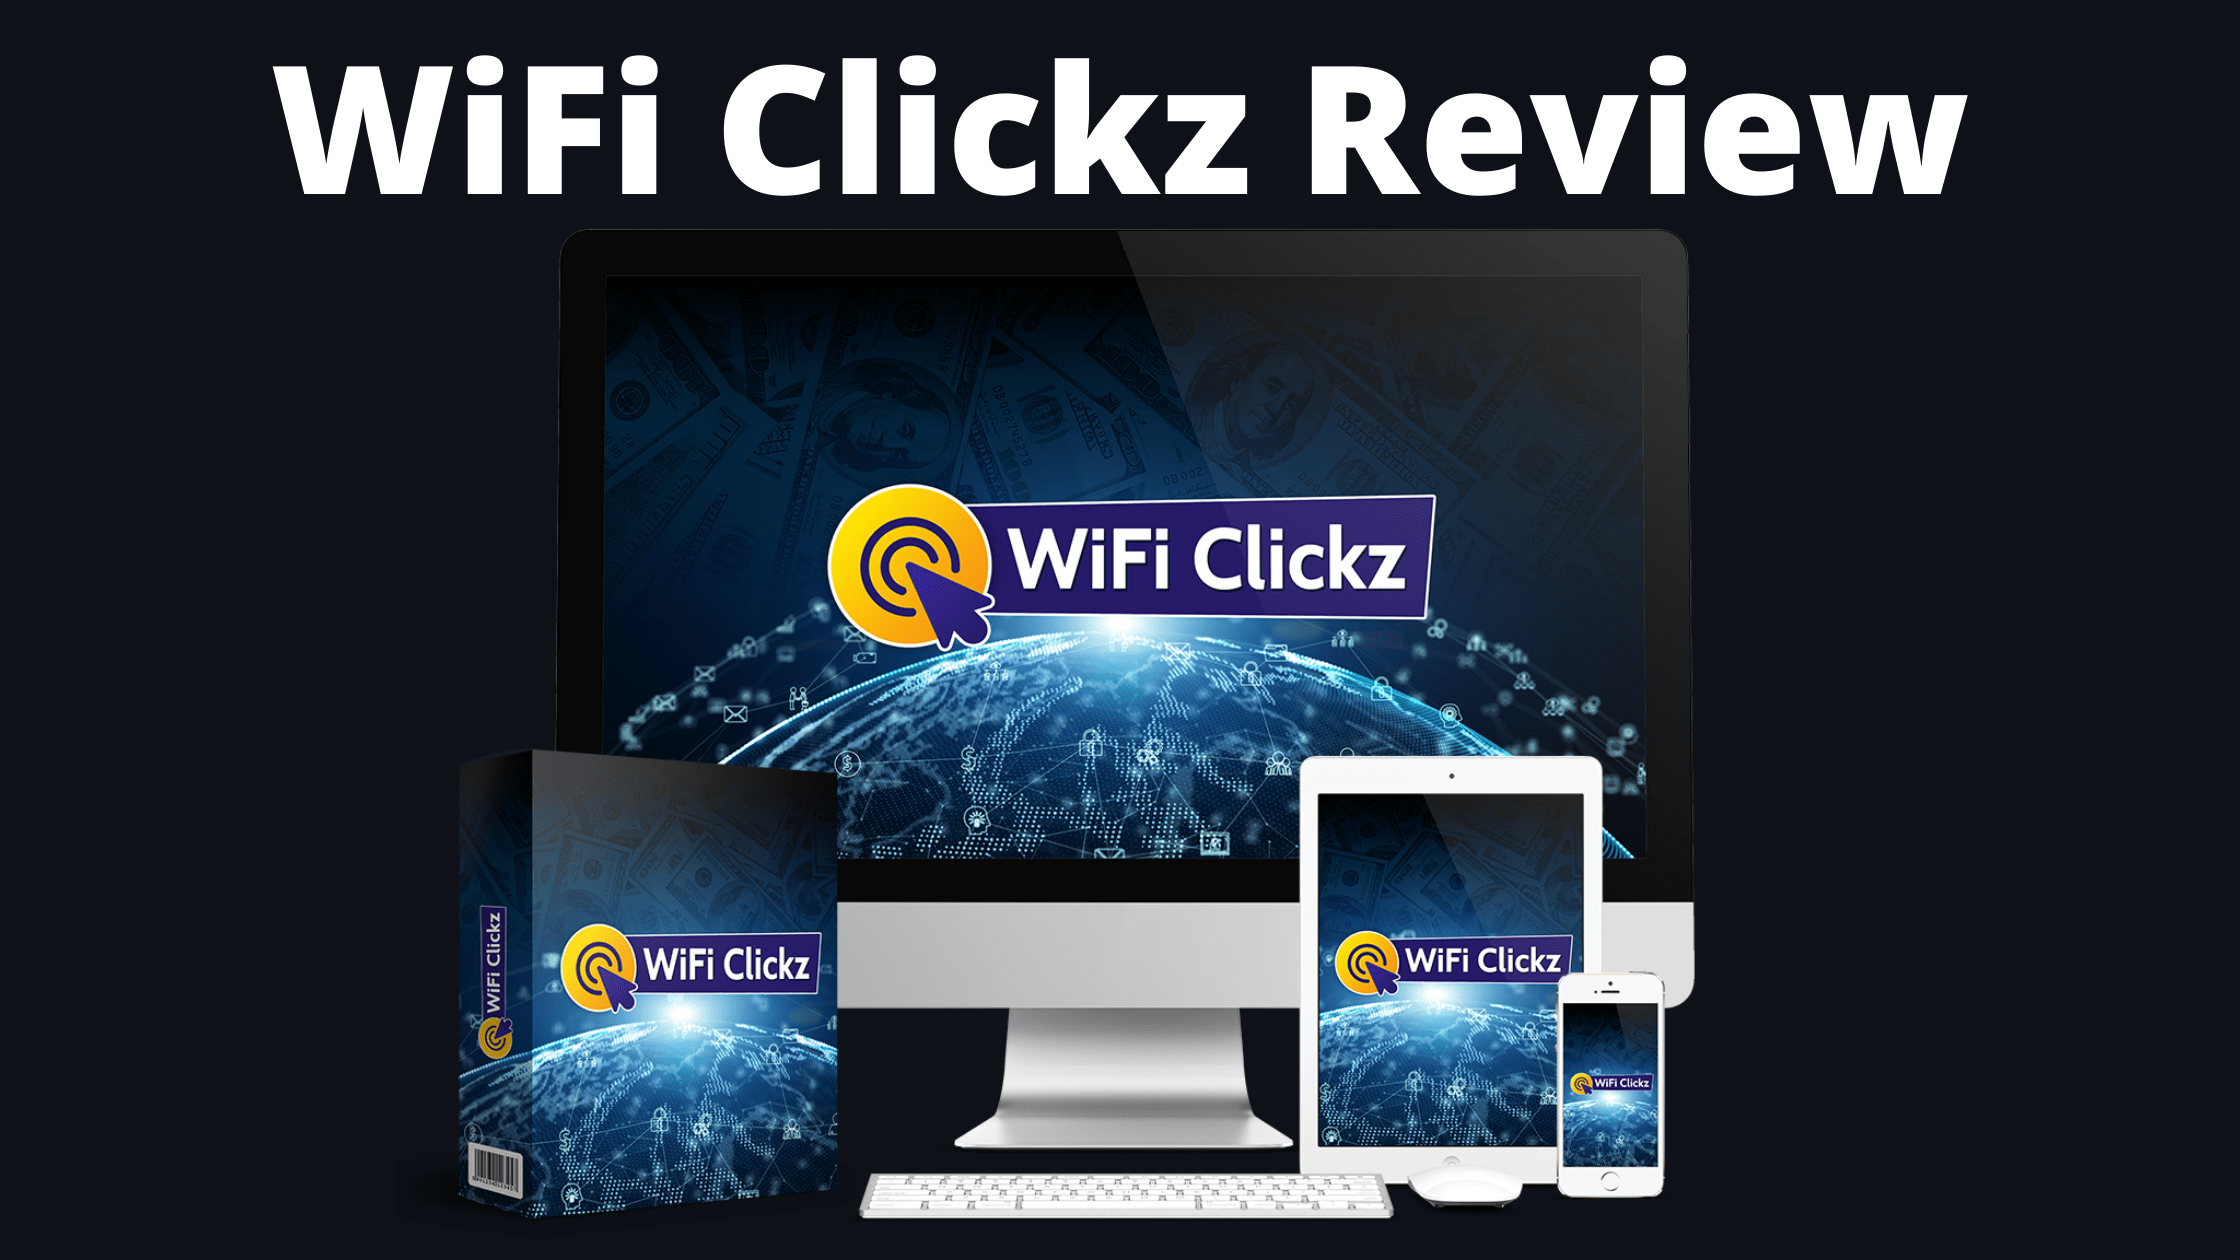 WiFi Clickz Review